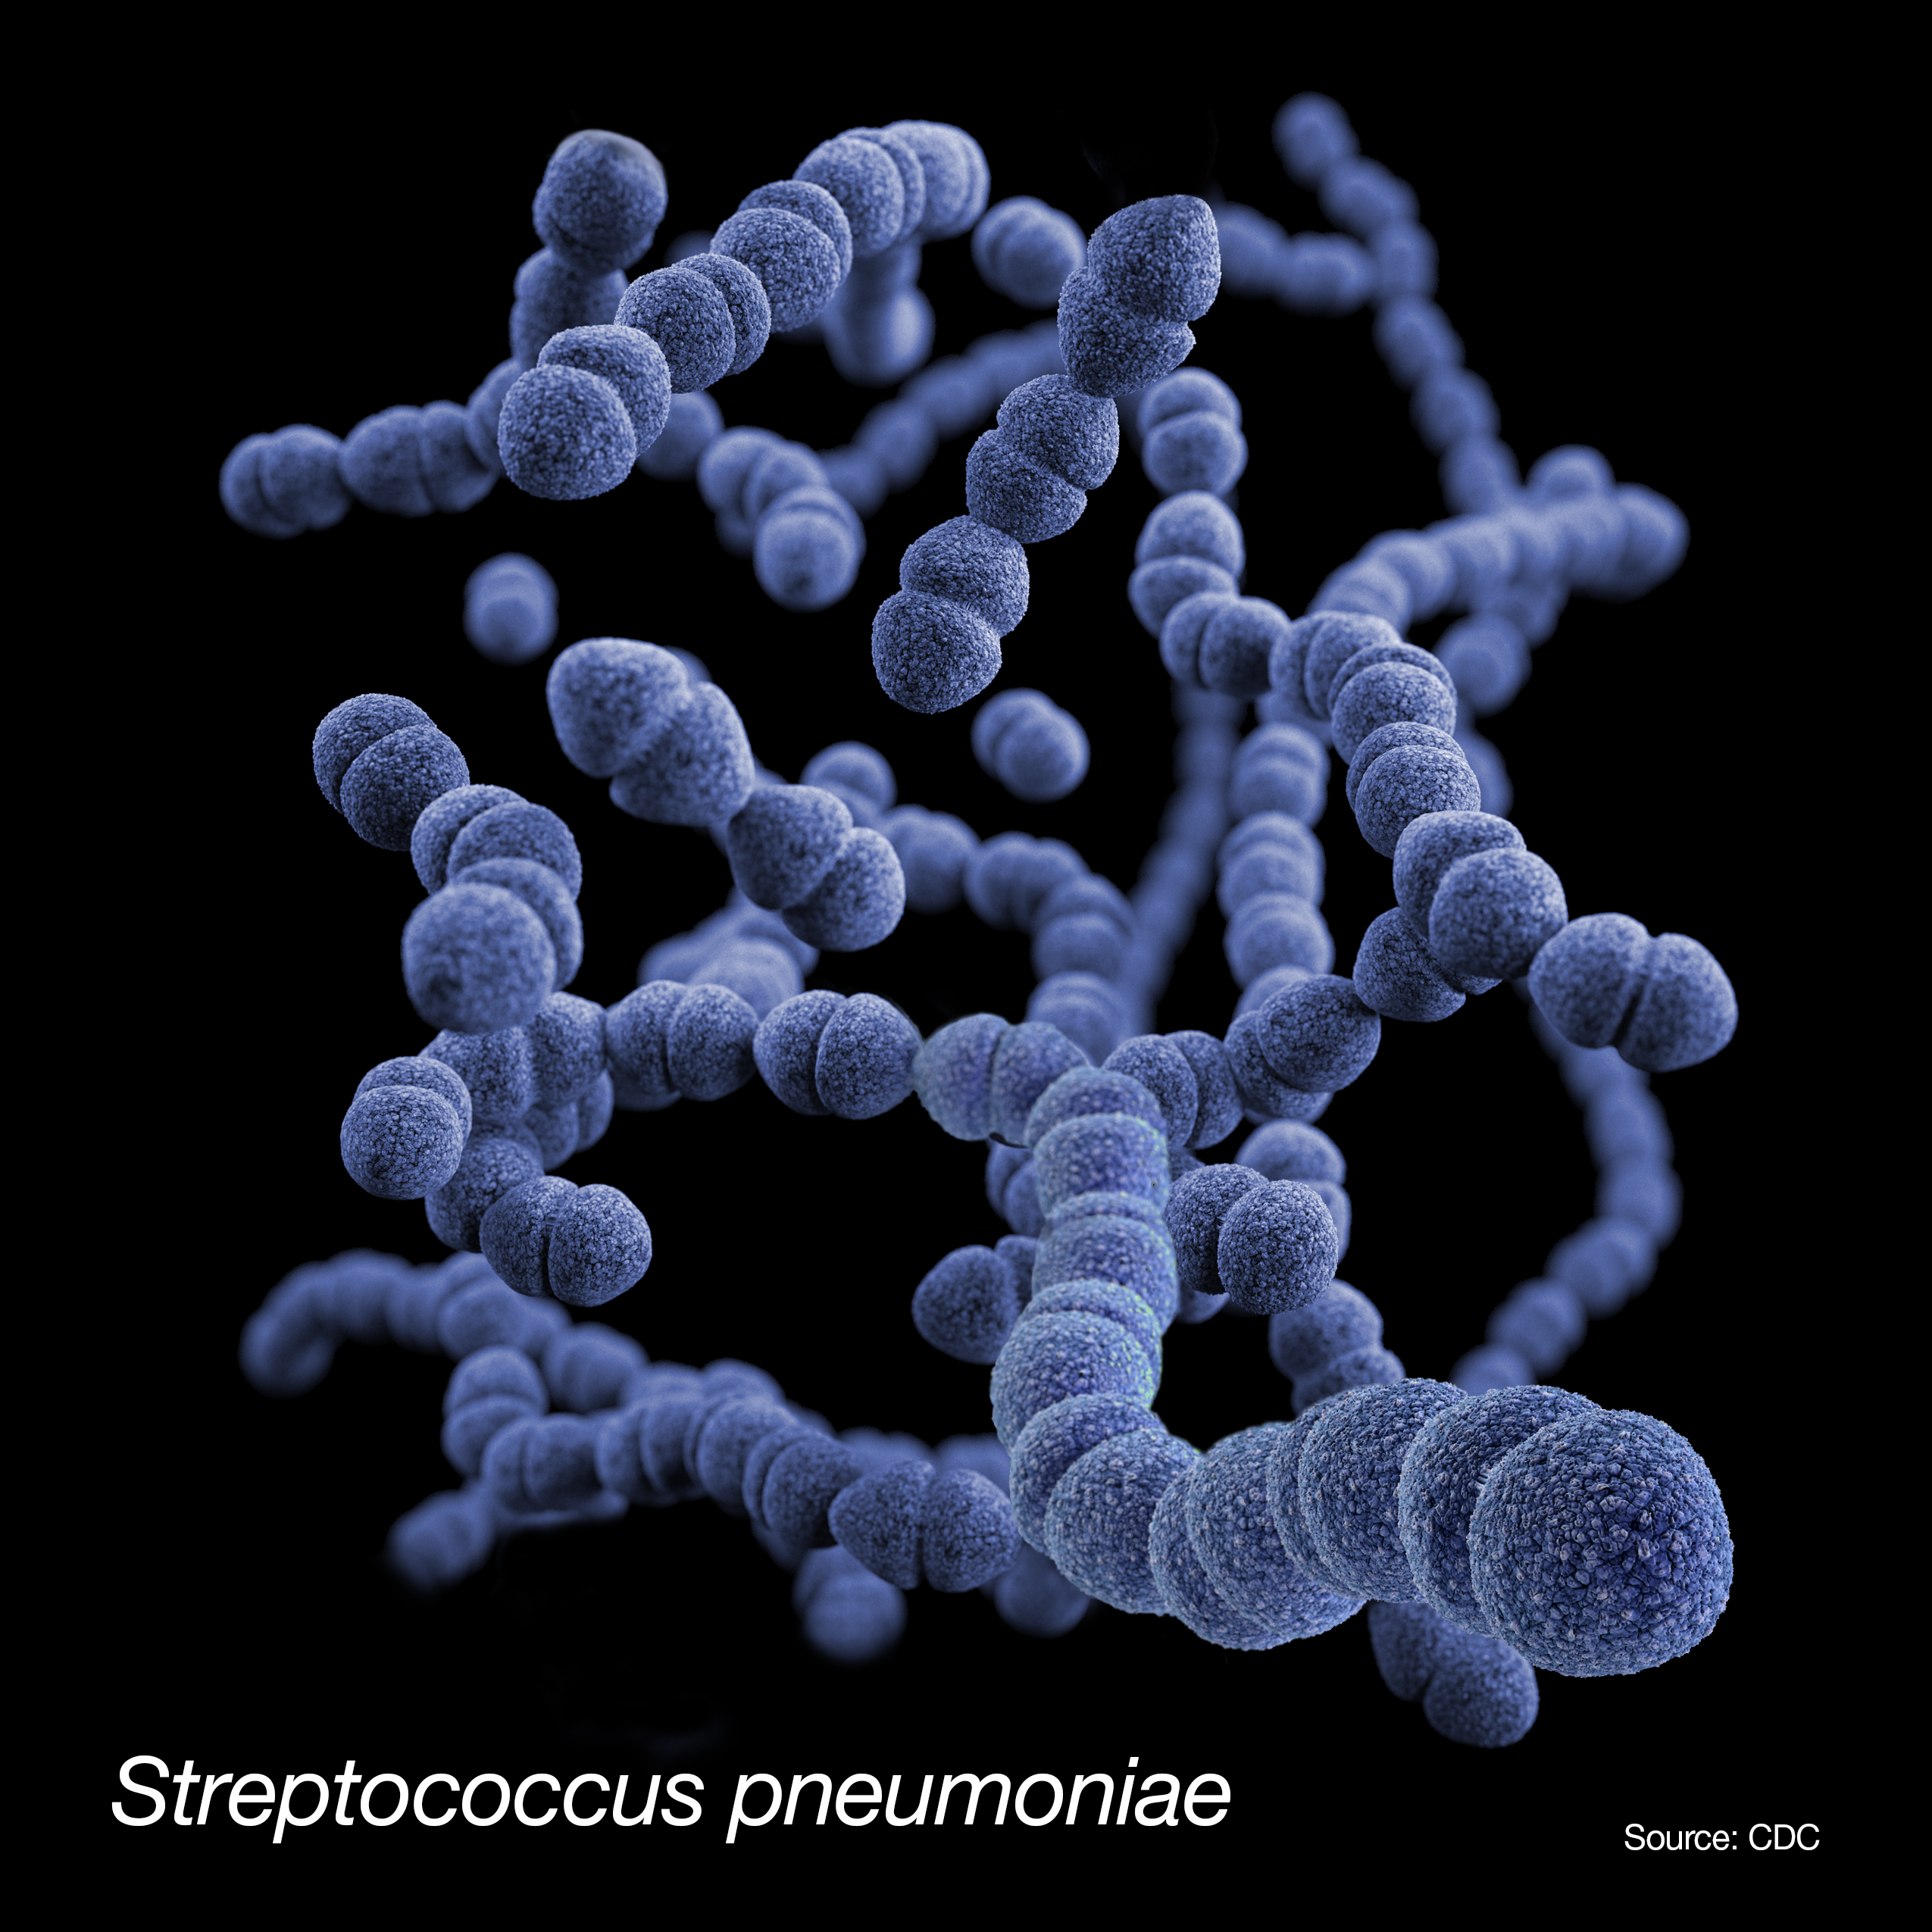 Strings of purple balls of Streptococcus pyogenes bacteria.